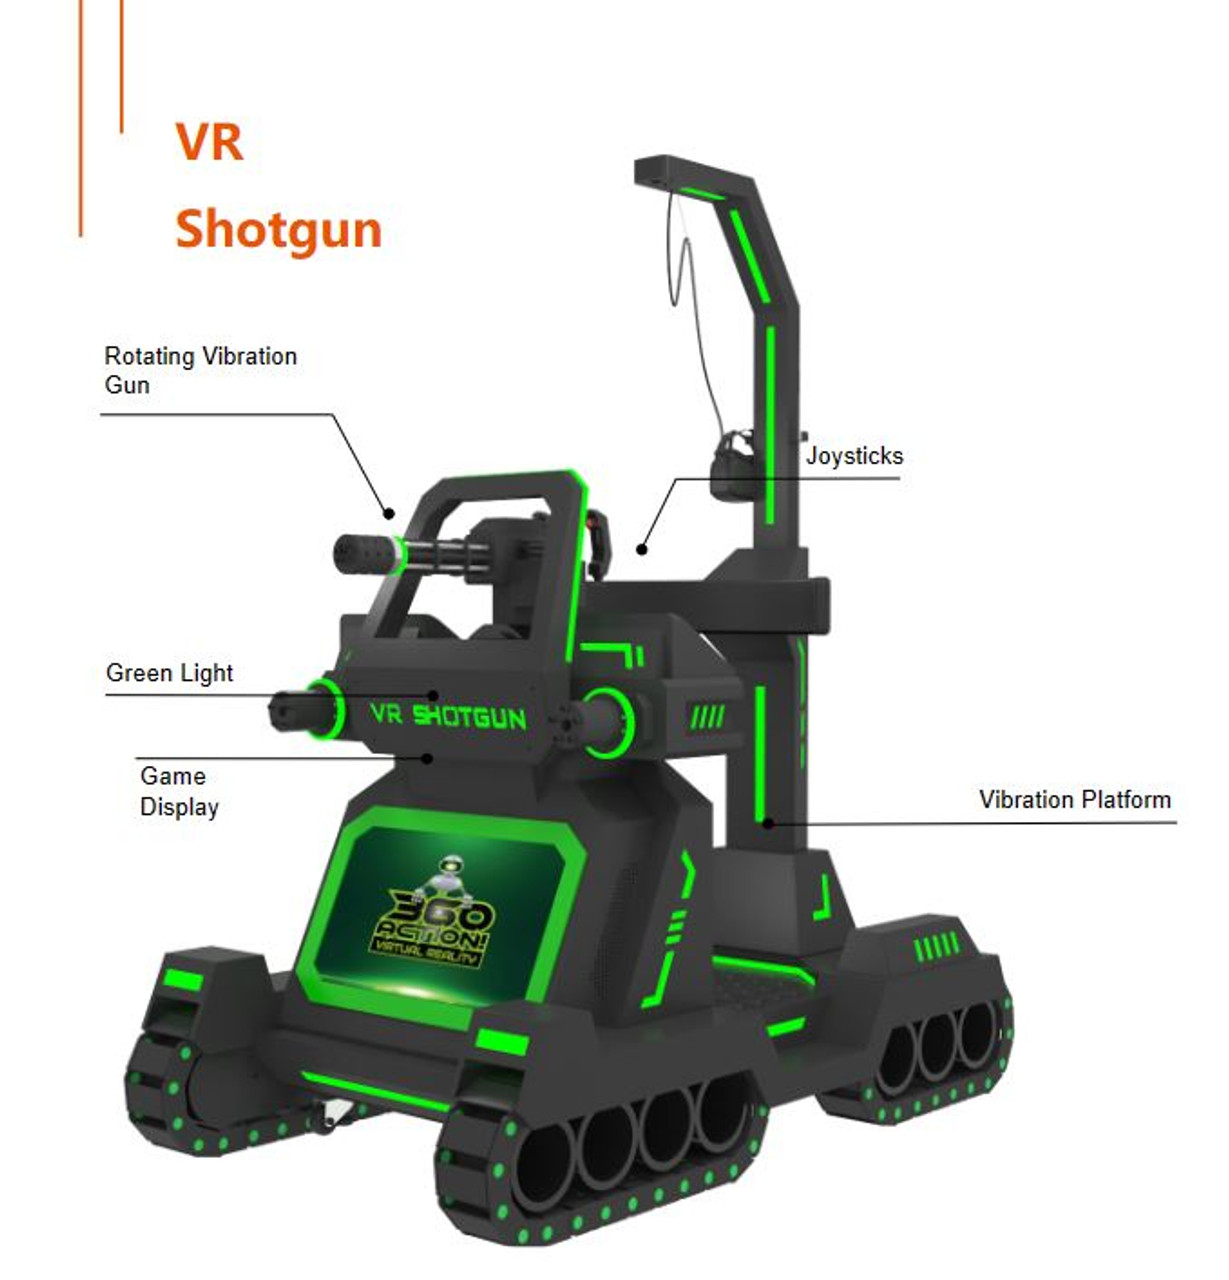 VR Shotgun